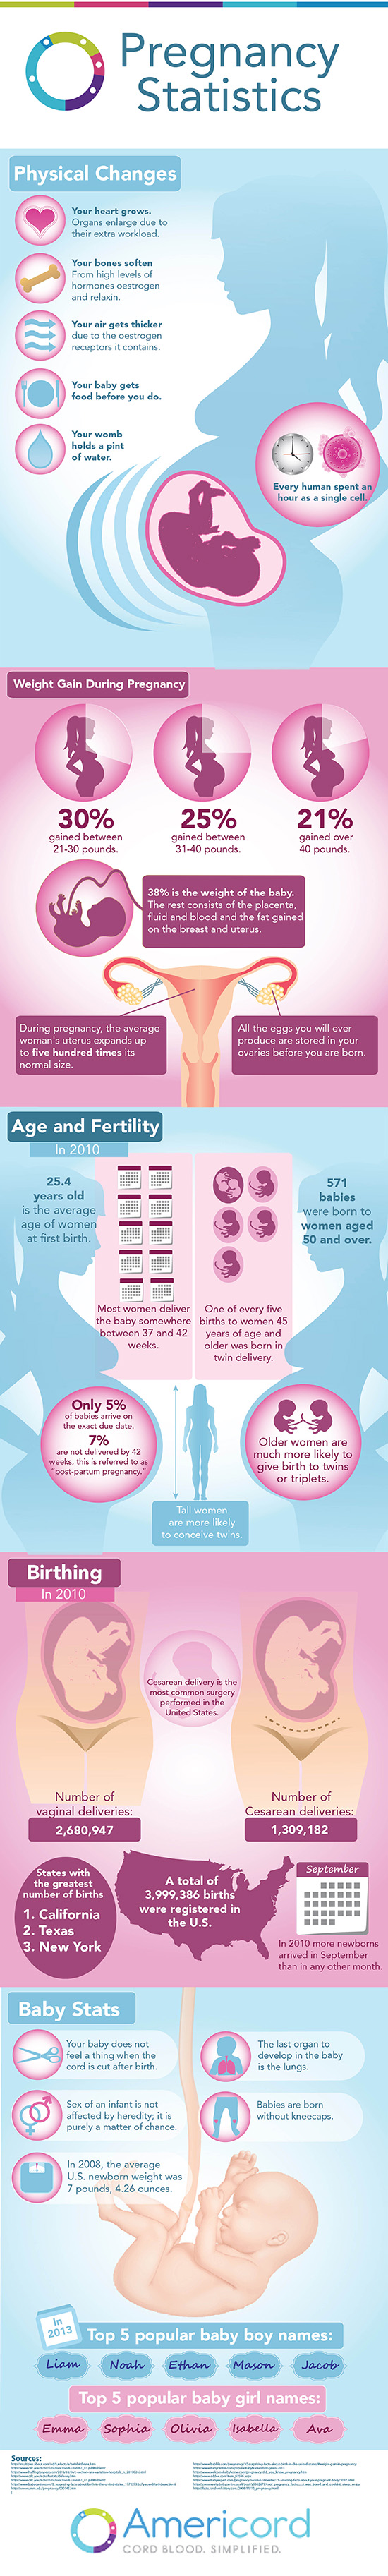 Pregnancy Statistics | Visual.ly